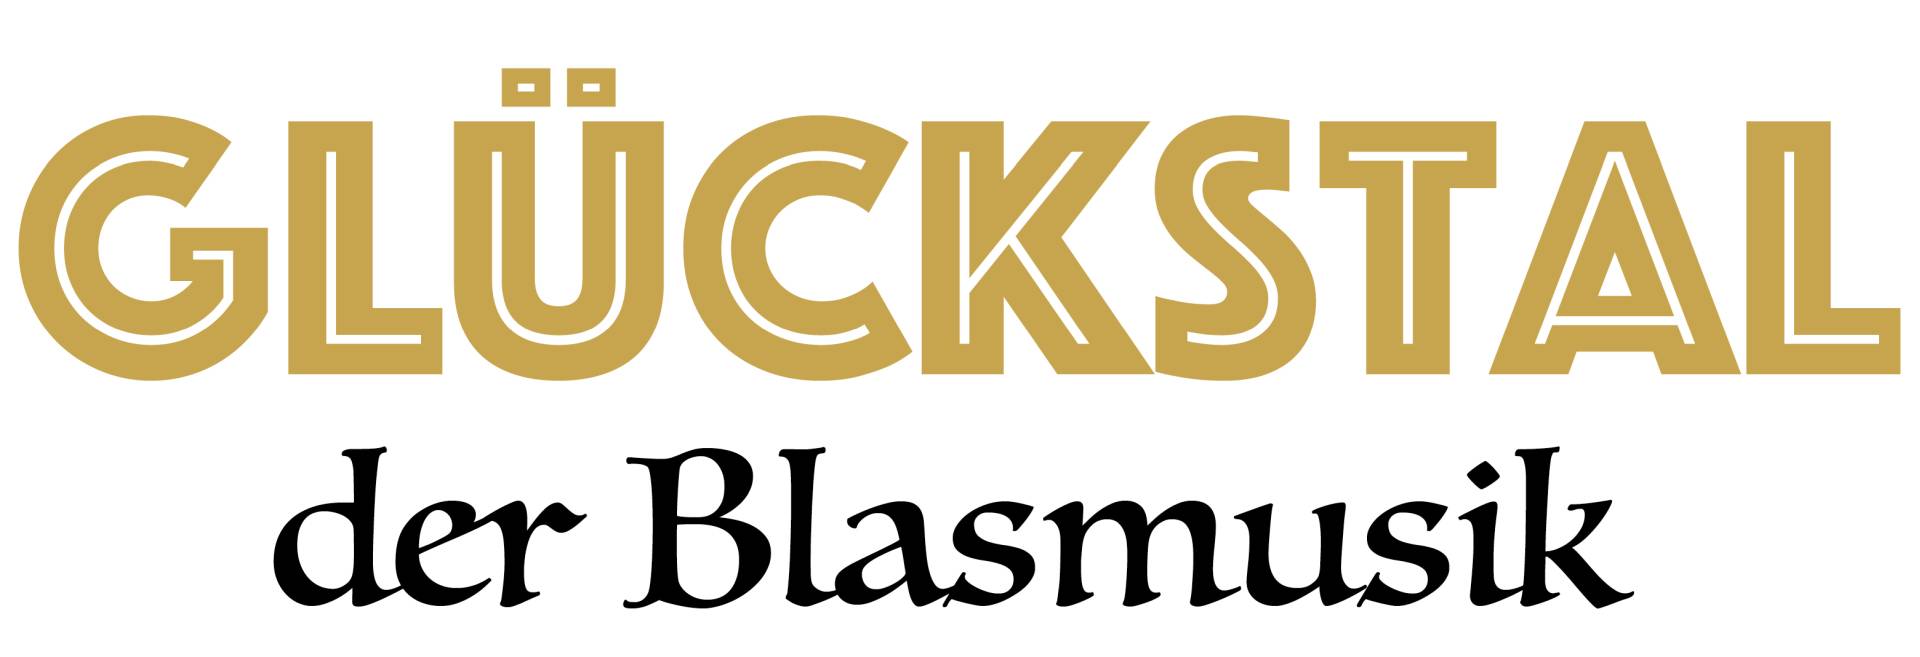 Glueckstal Logo 1920